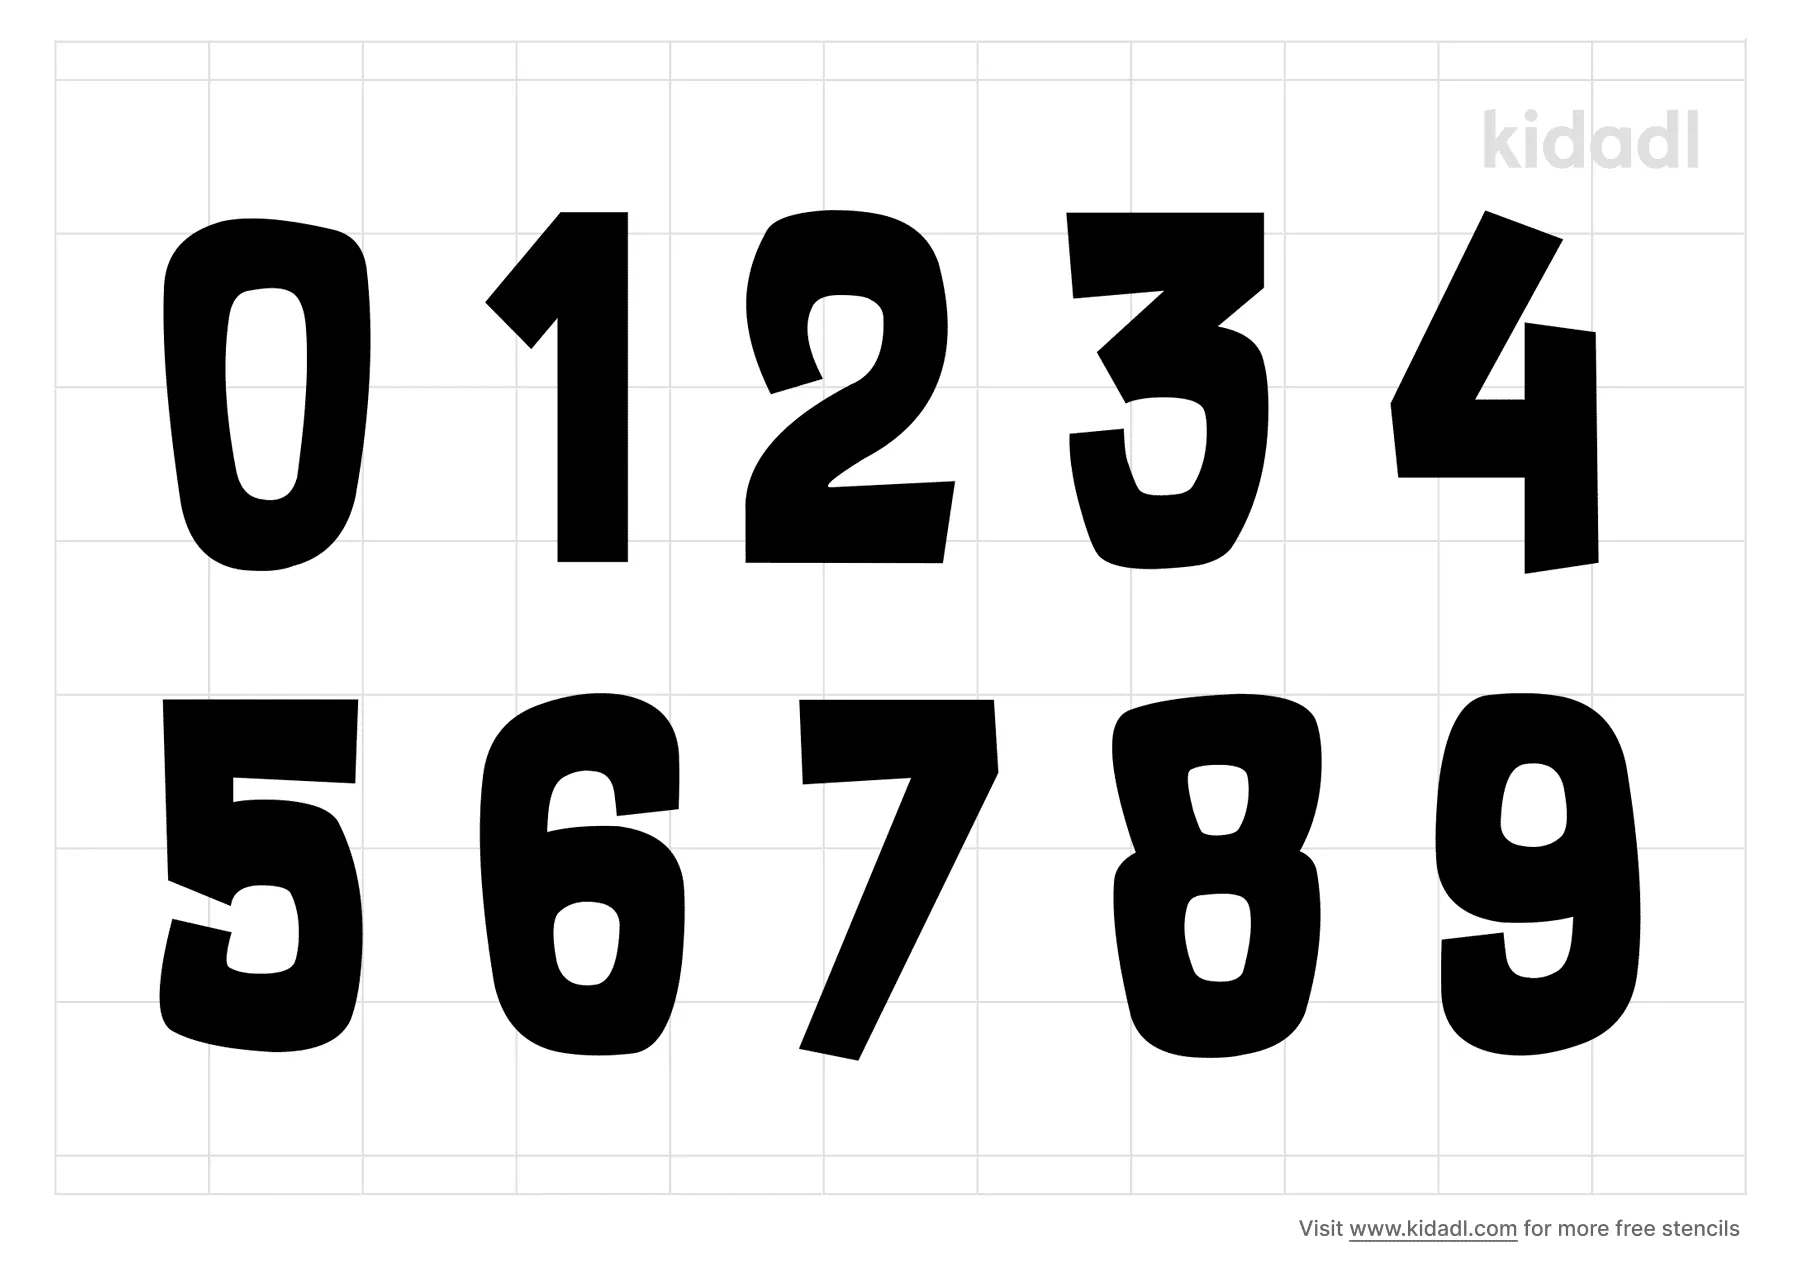 address number stencils free printable numbers stencils kidadl and numbers stencils free printable stencils kidadl